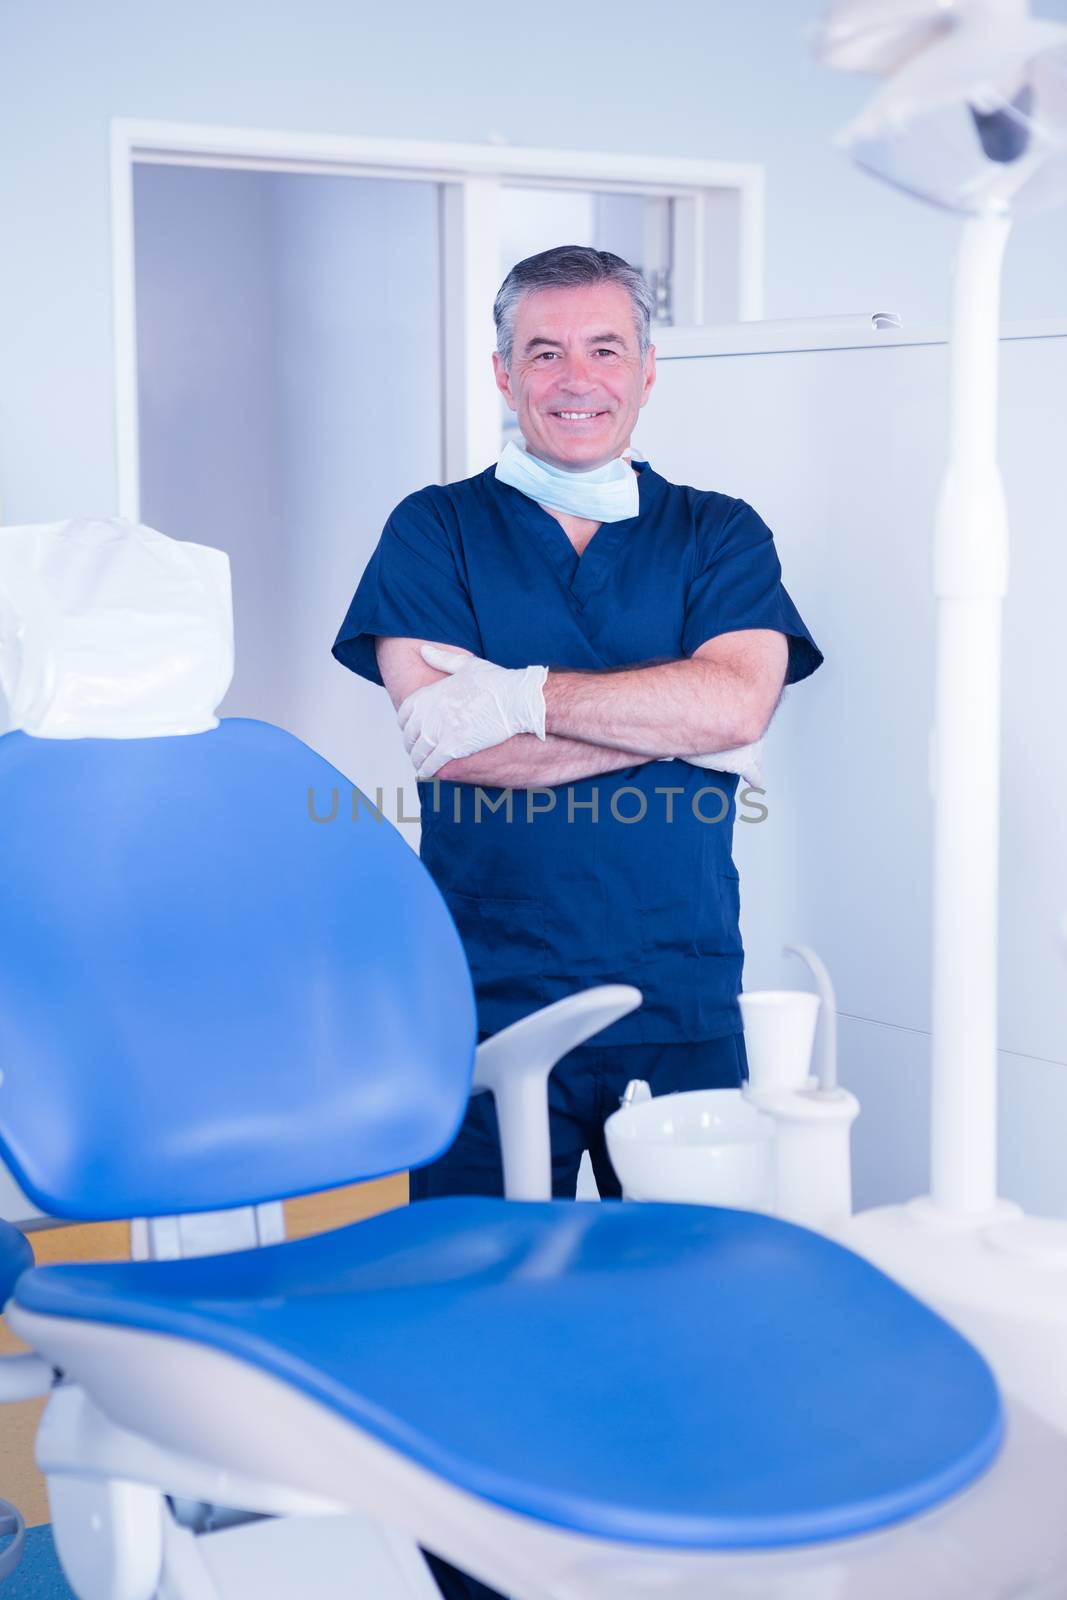 Dentist in blue scrubs smiling at camera beside chair by Wavebreakmedia